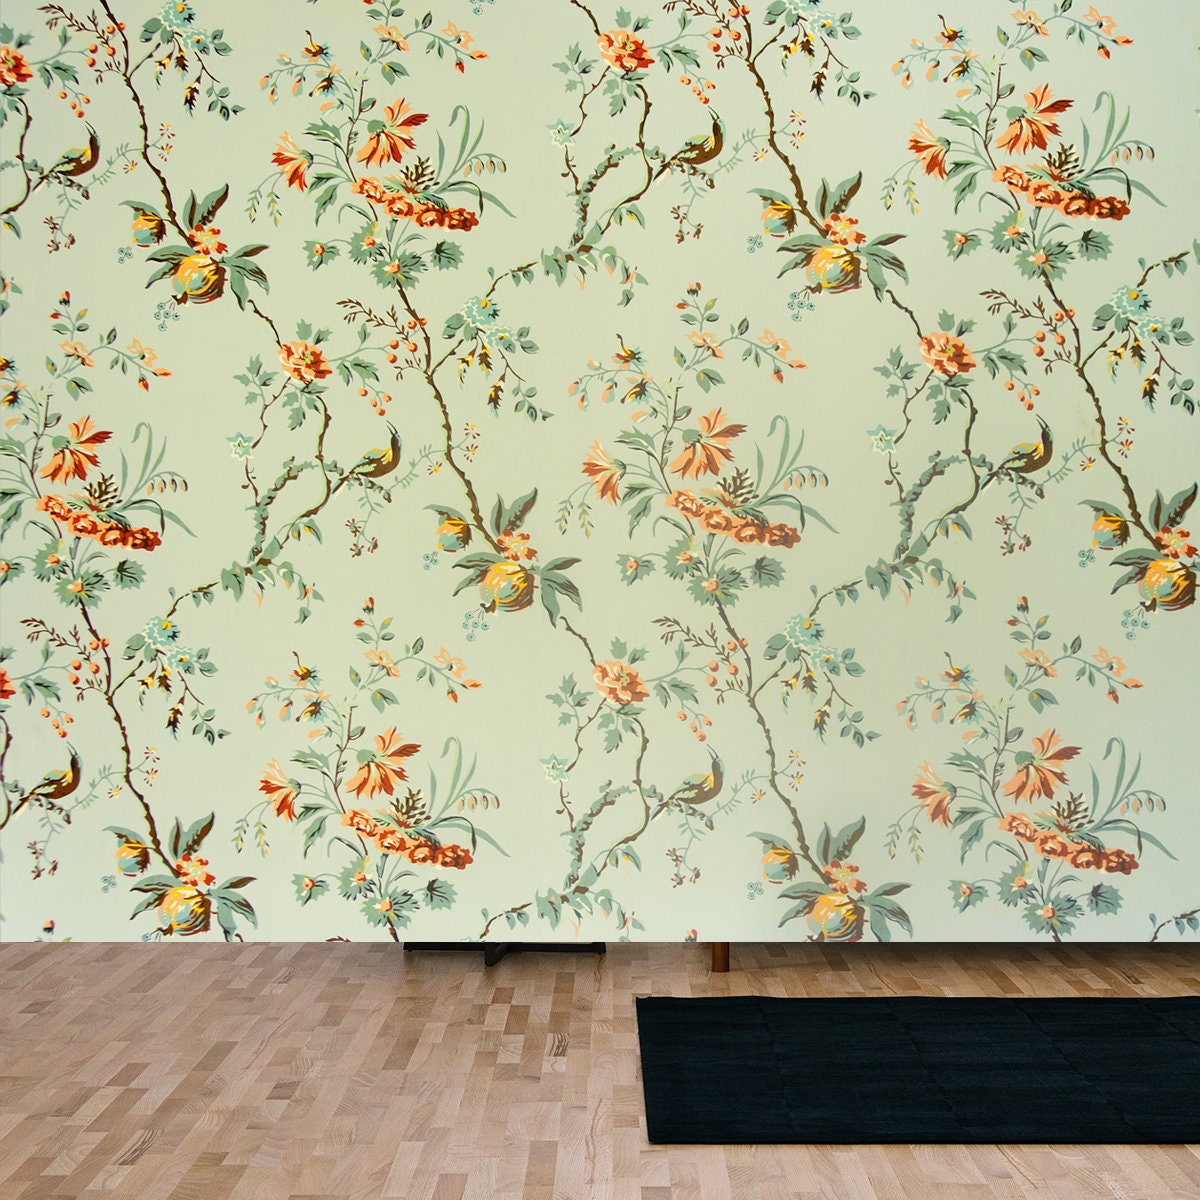 Vintage Wallpaper - Floral Pattern of 18th Century Wallpaper Living Room Mural